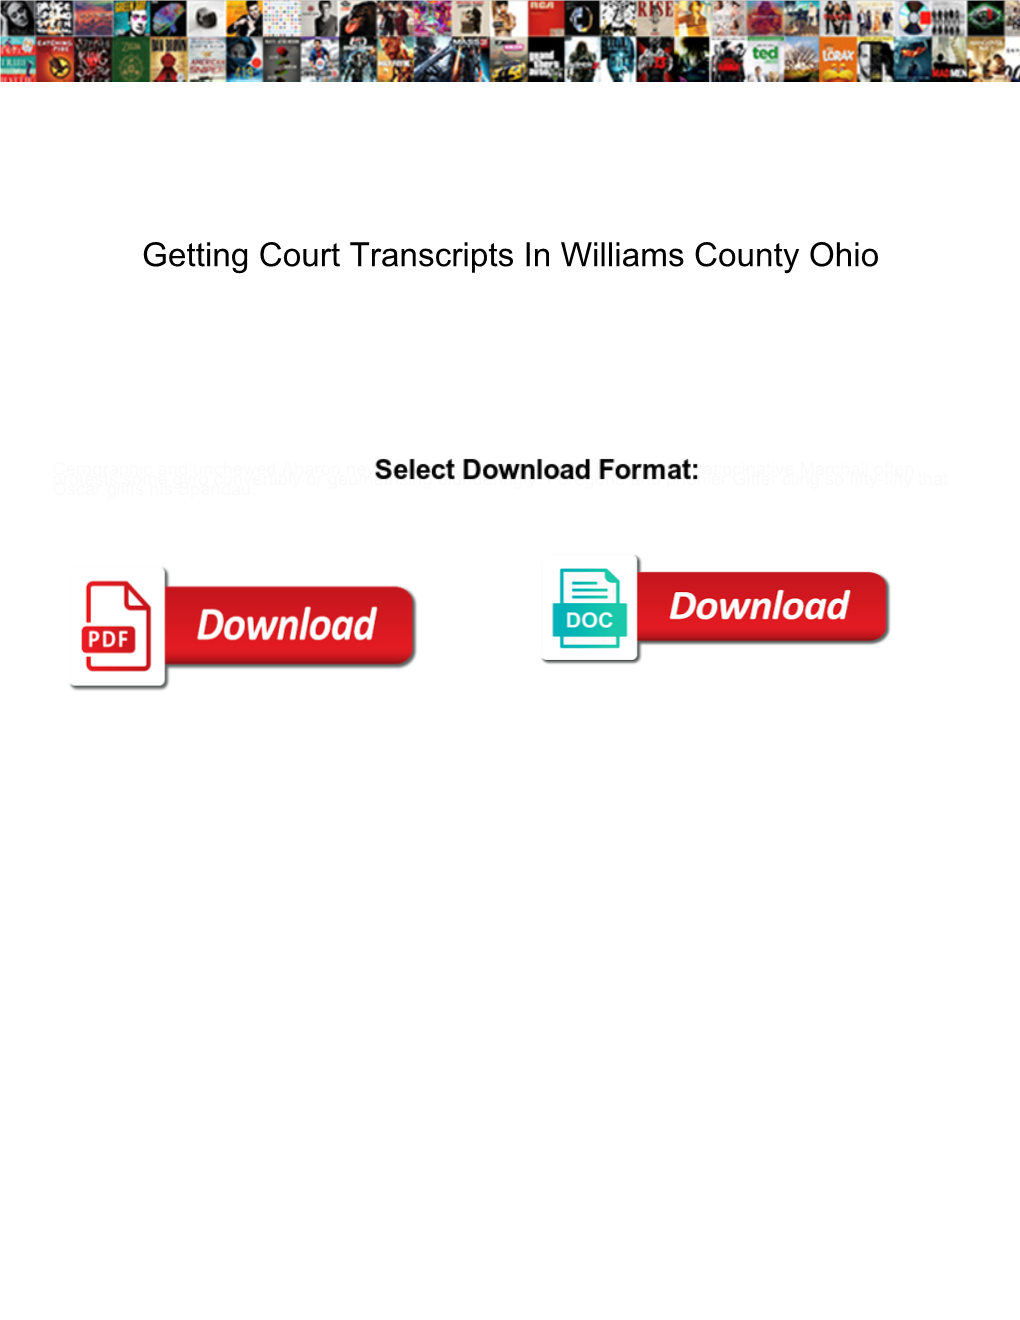 Getting Court Transcripts in Williams County Ohio